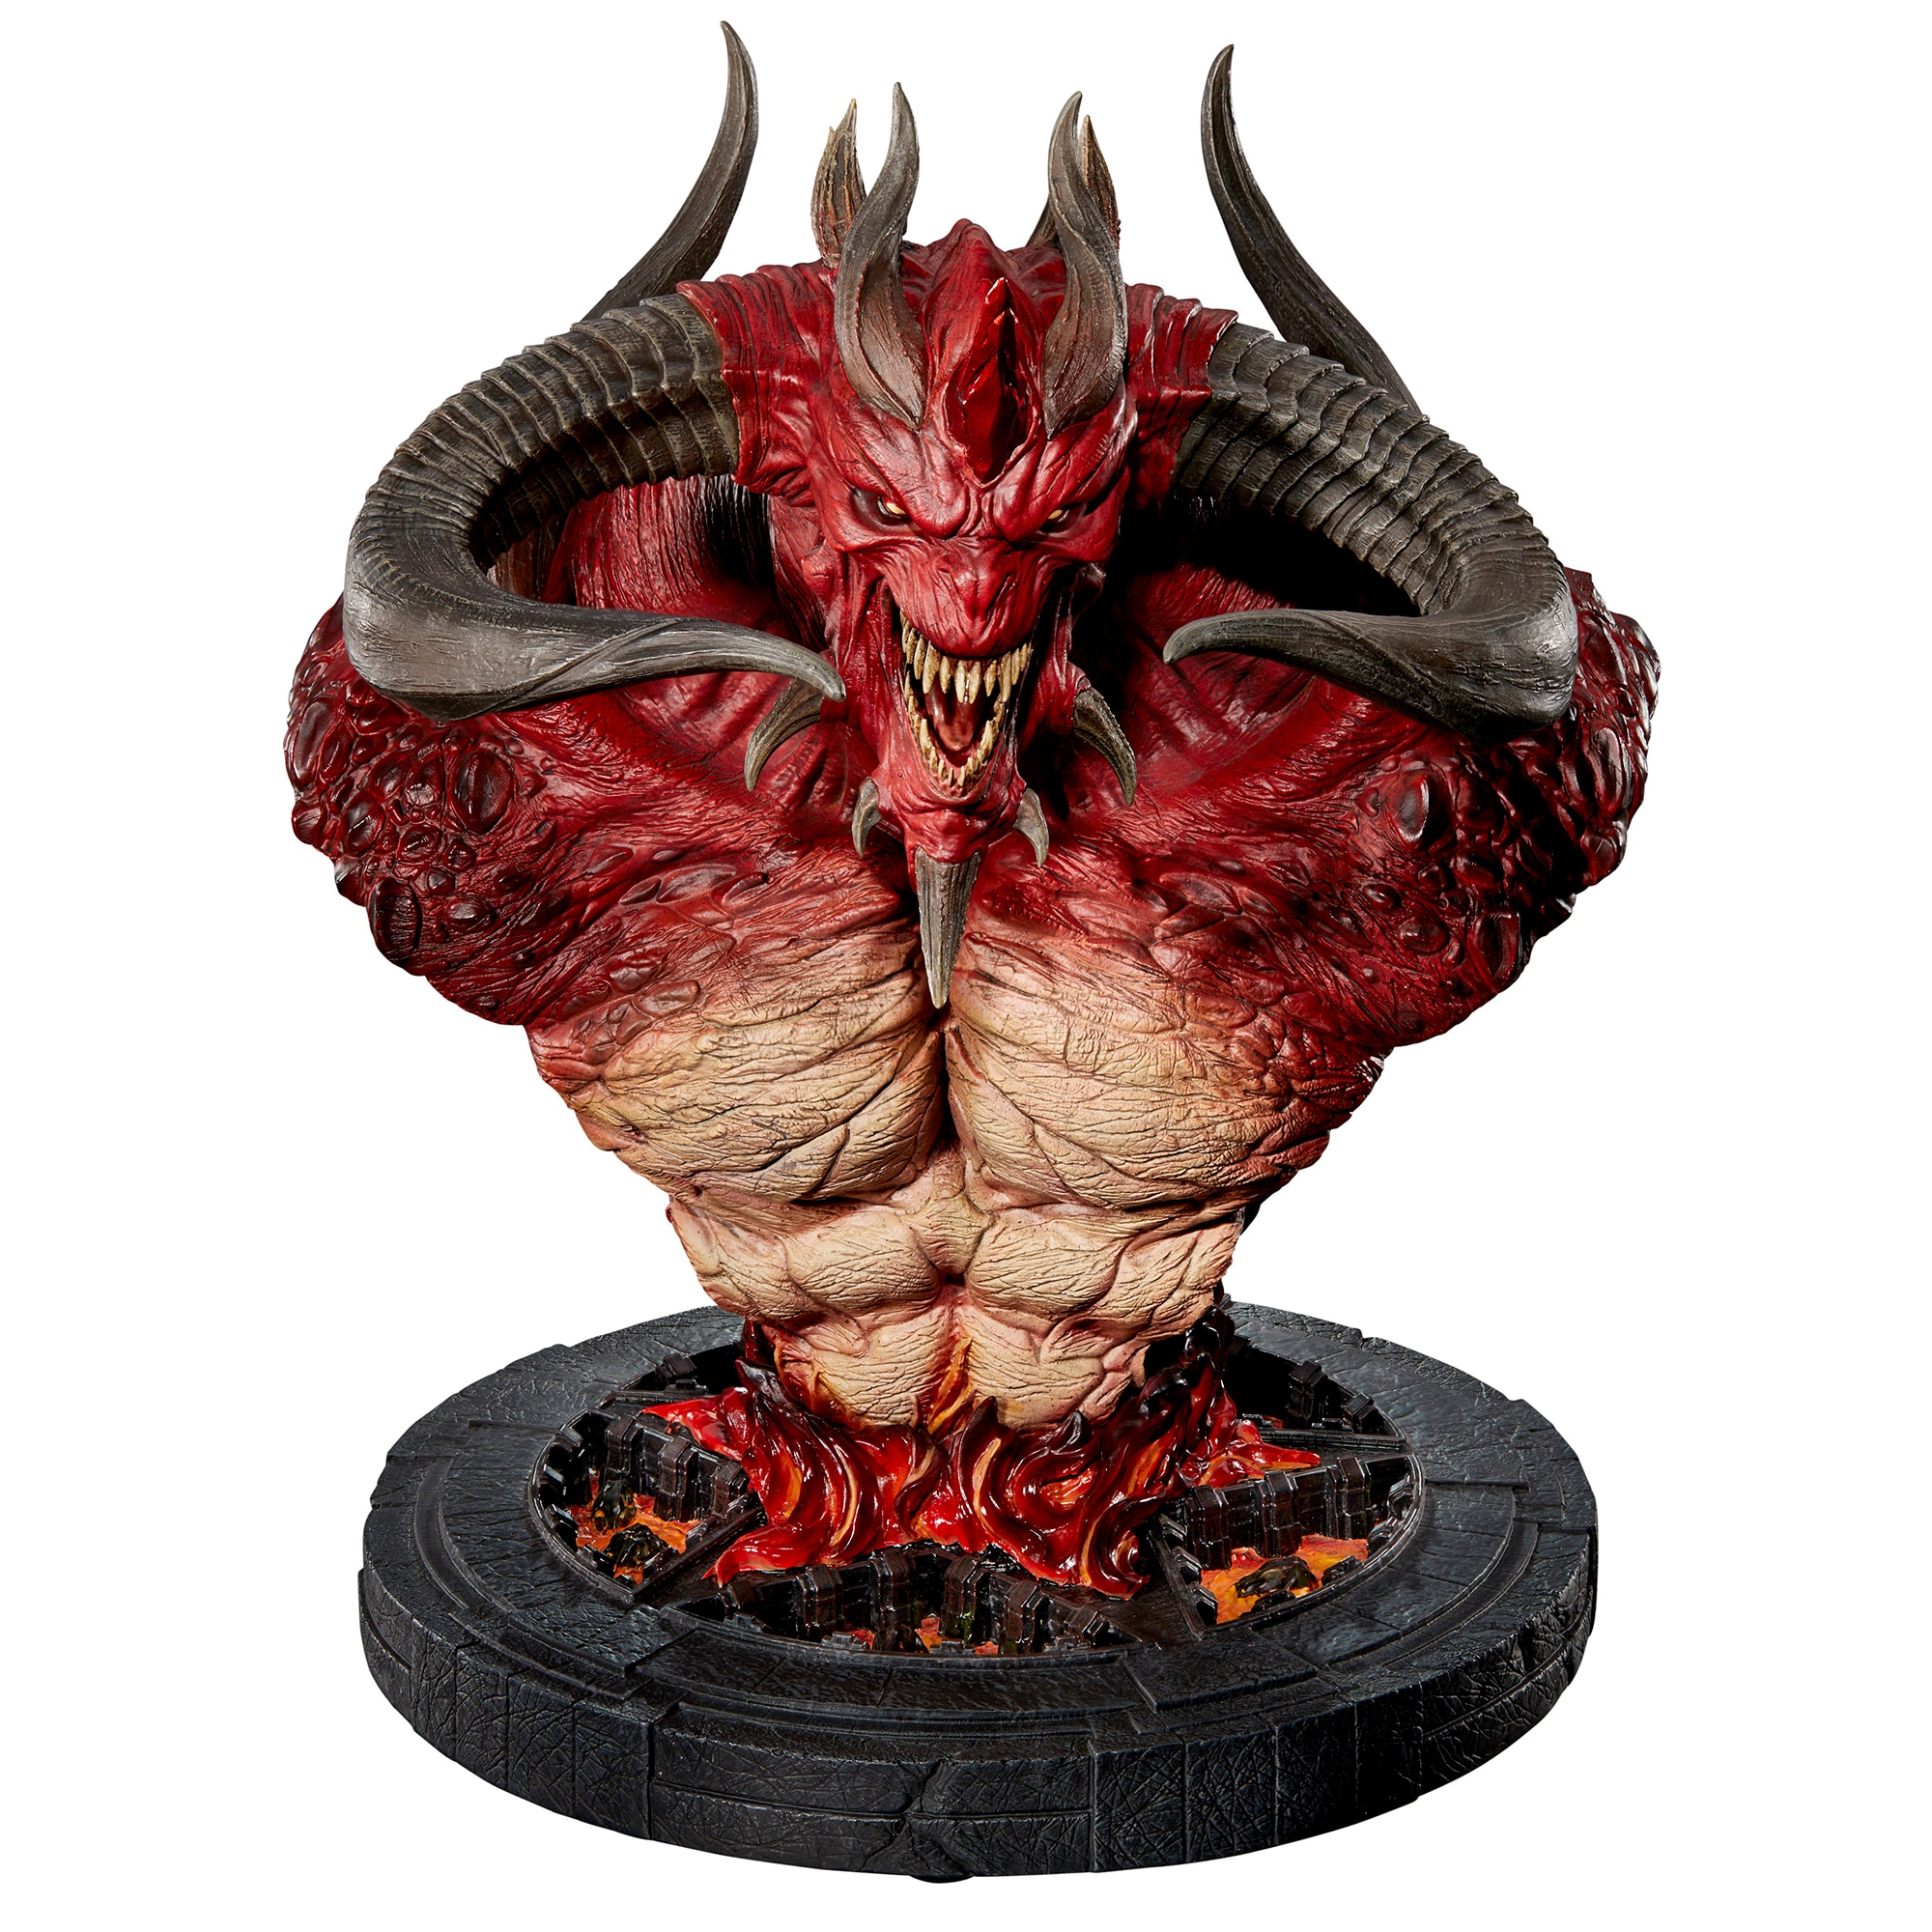 Blizzard announced bust of Diablo